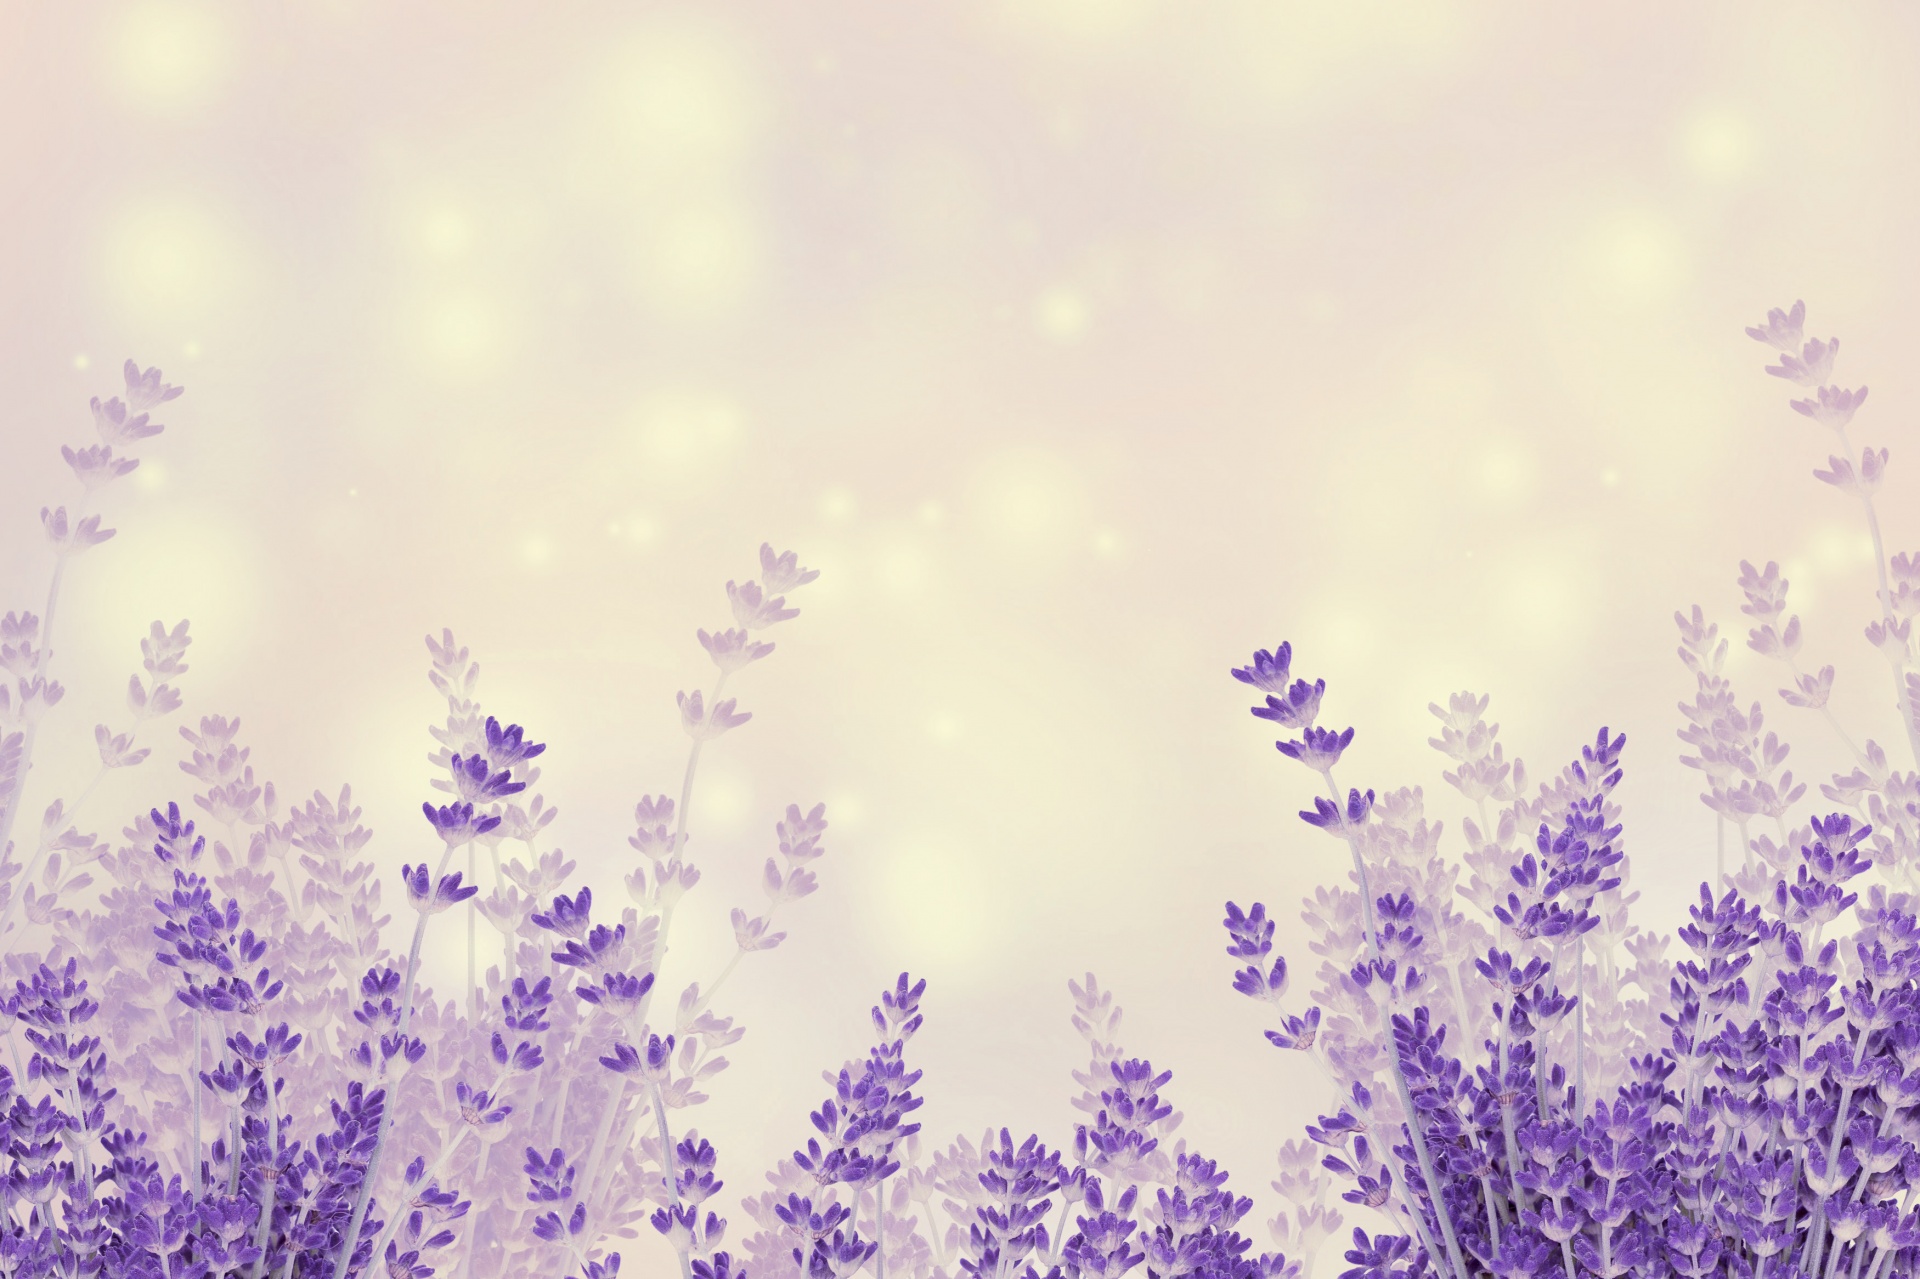 Leavender flowers dreamy background